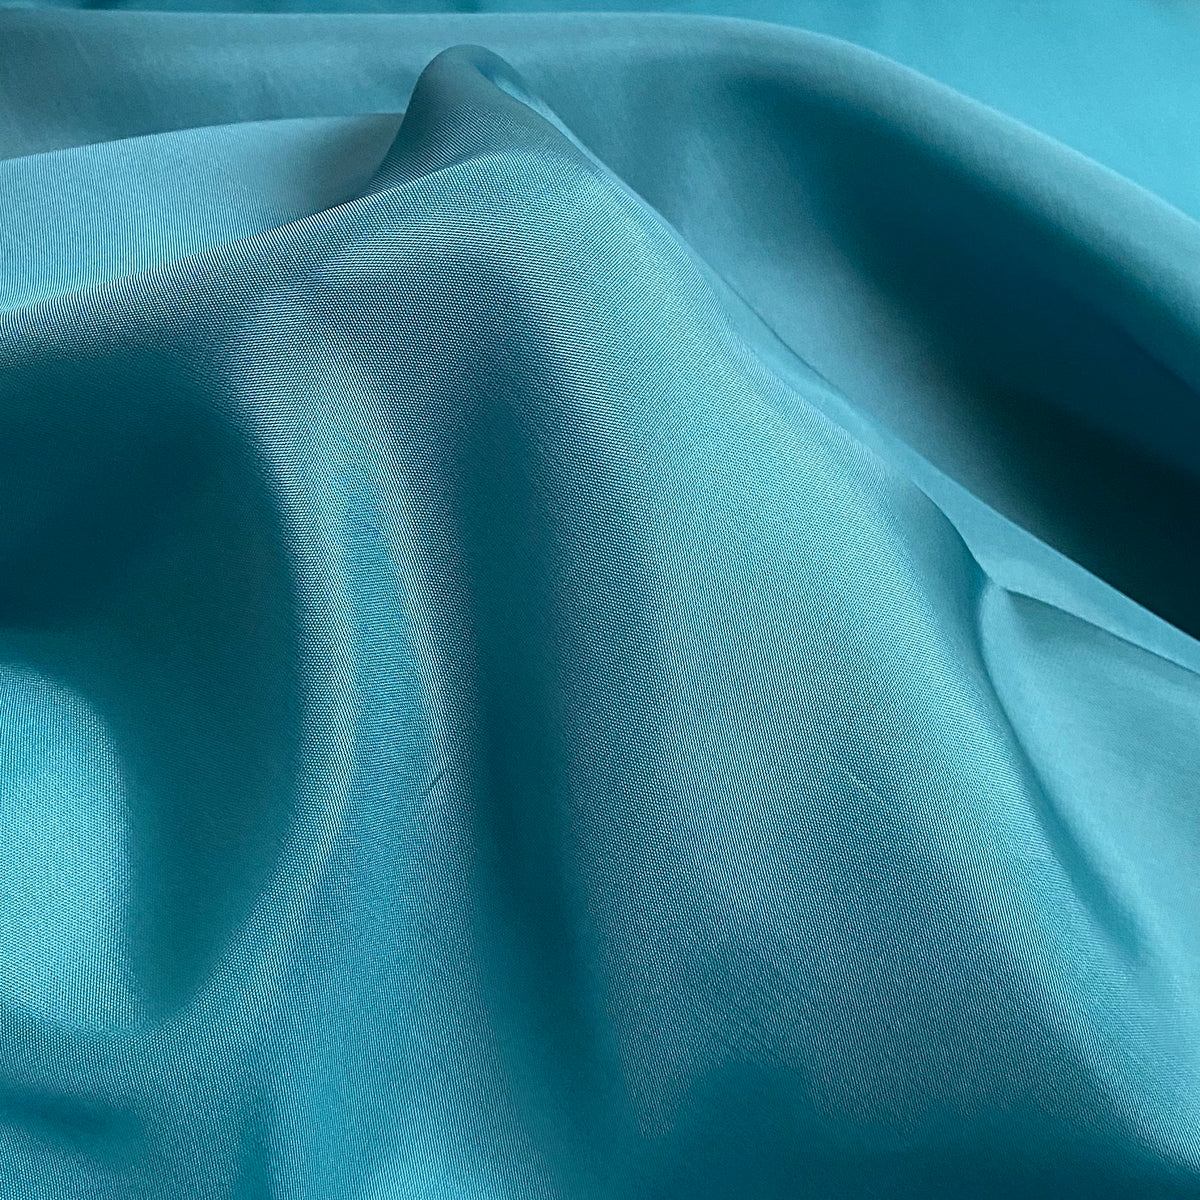 Cupro Lining Fabric - Peacock blue - Priced per 0.5 metre